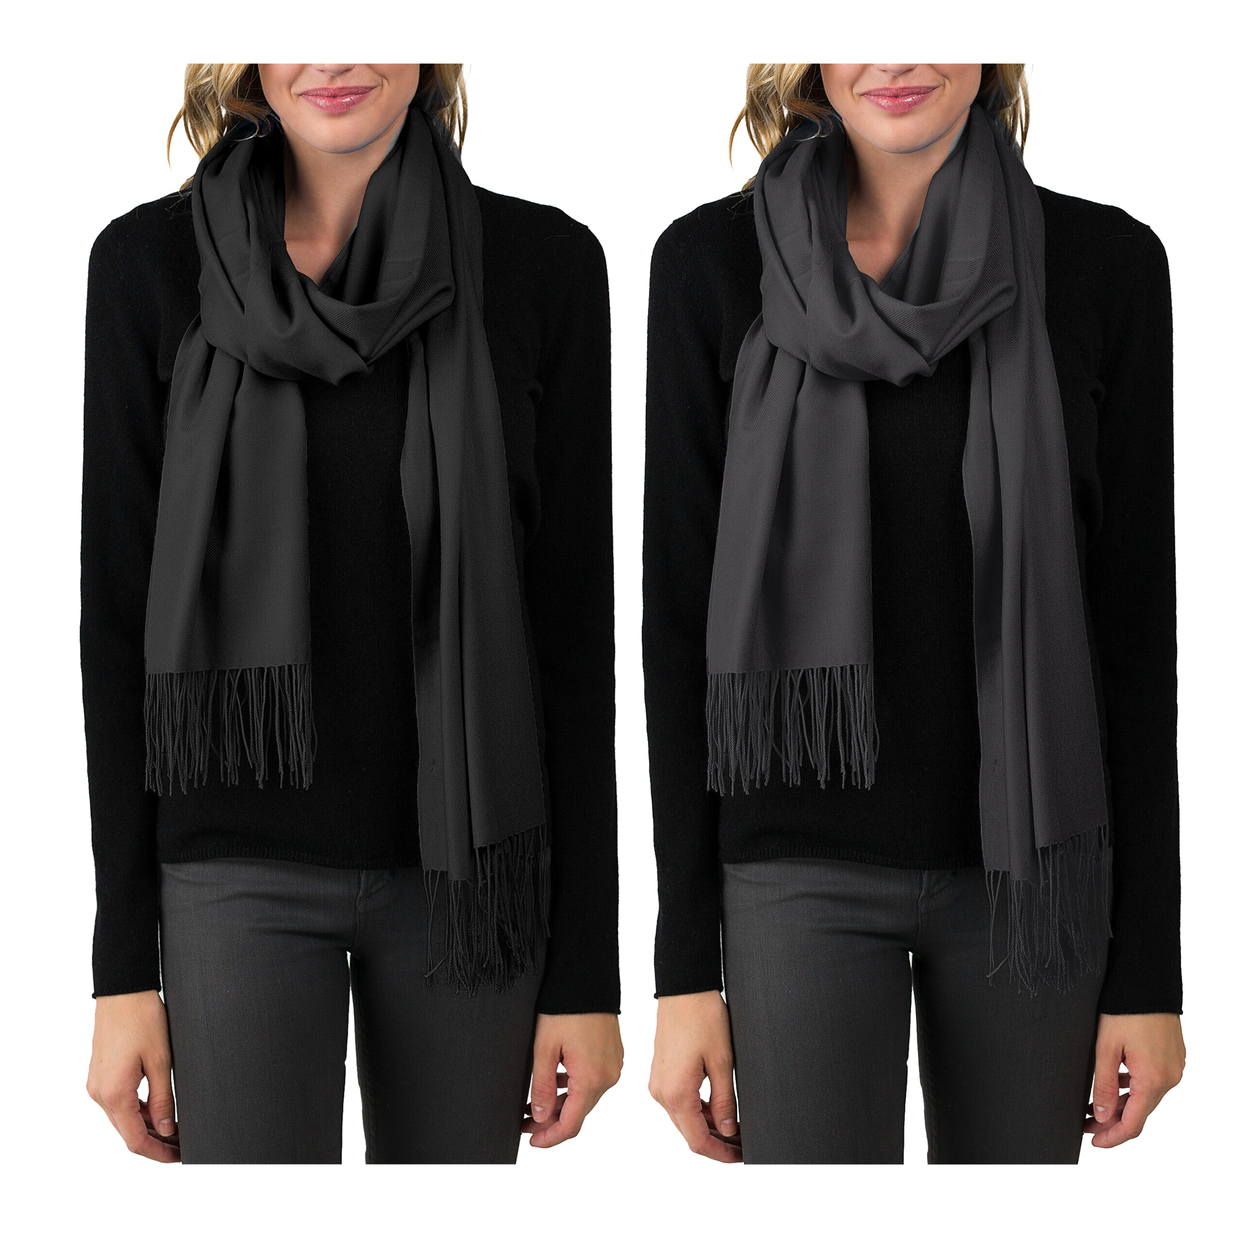 2-Pack: Women's Ultra Soft Cashmere Feel Winter Warm Scarfs - Black&Grey